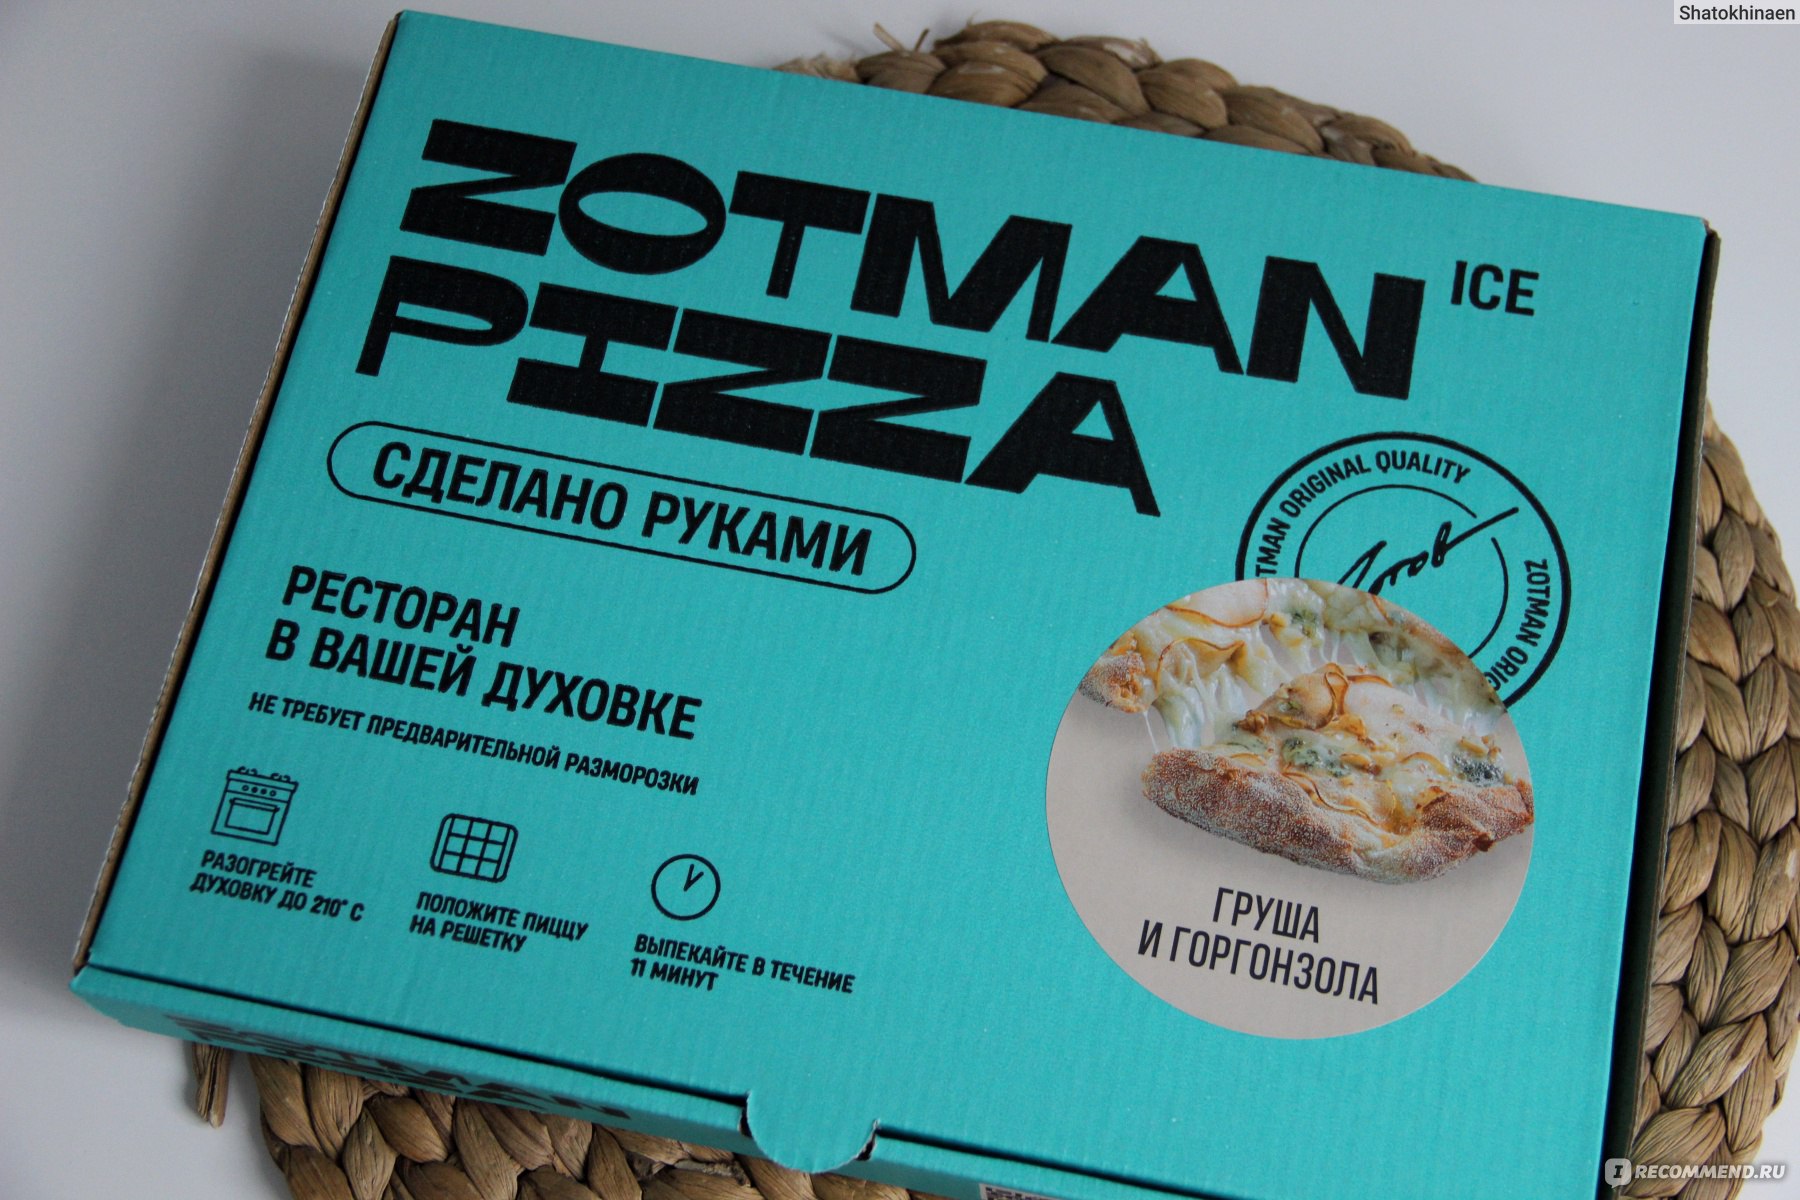 Zotman pizza интервью